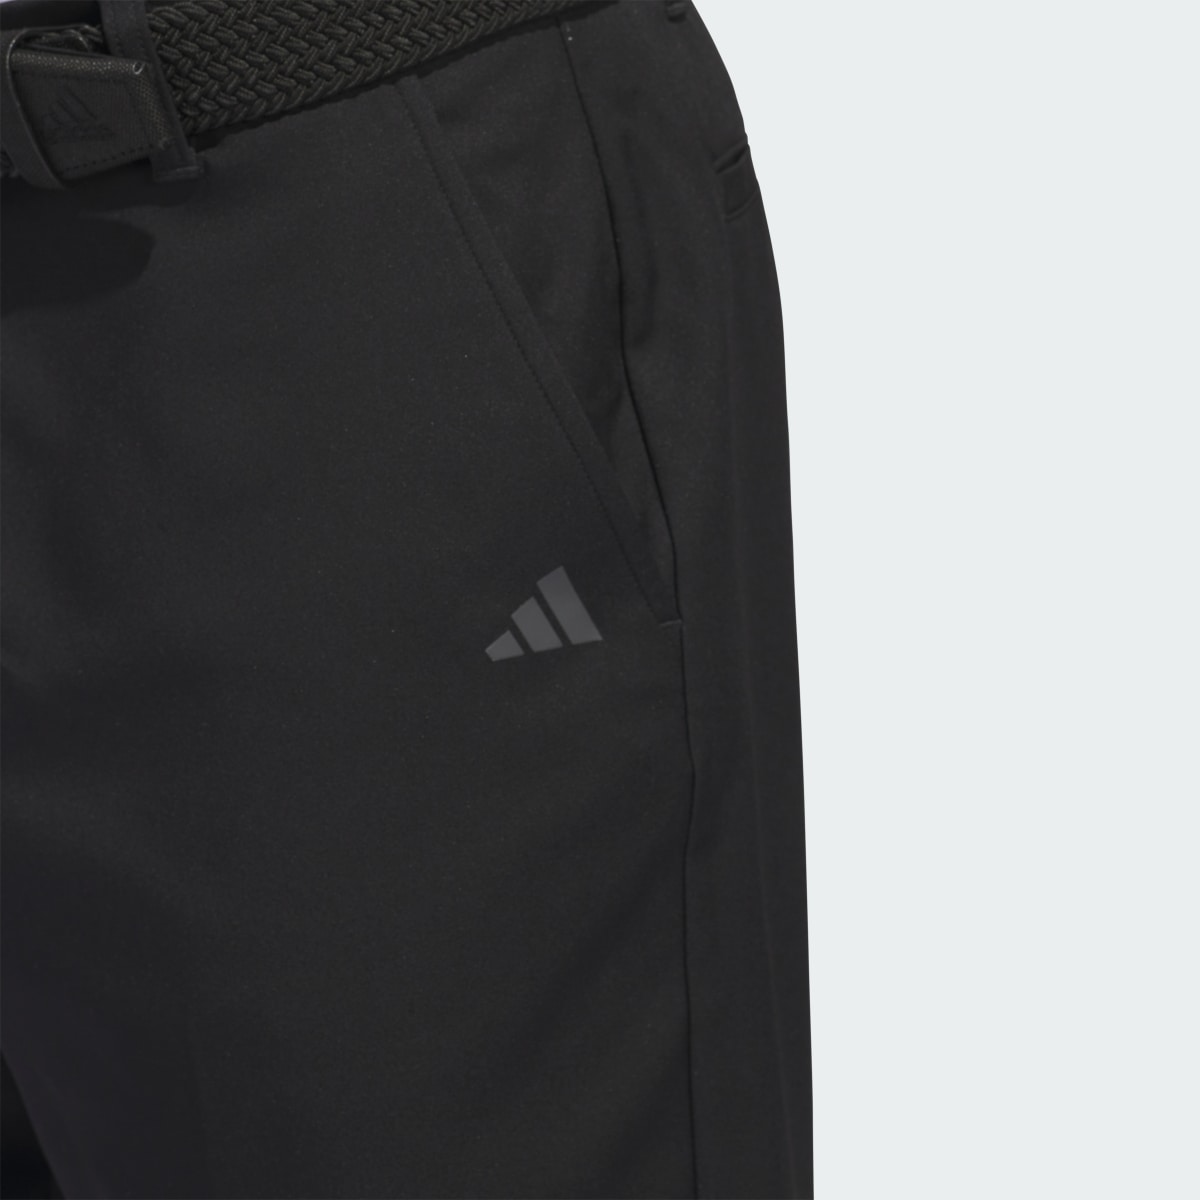 Adidas Adi Advantage Golf Shorts. 6